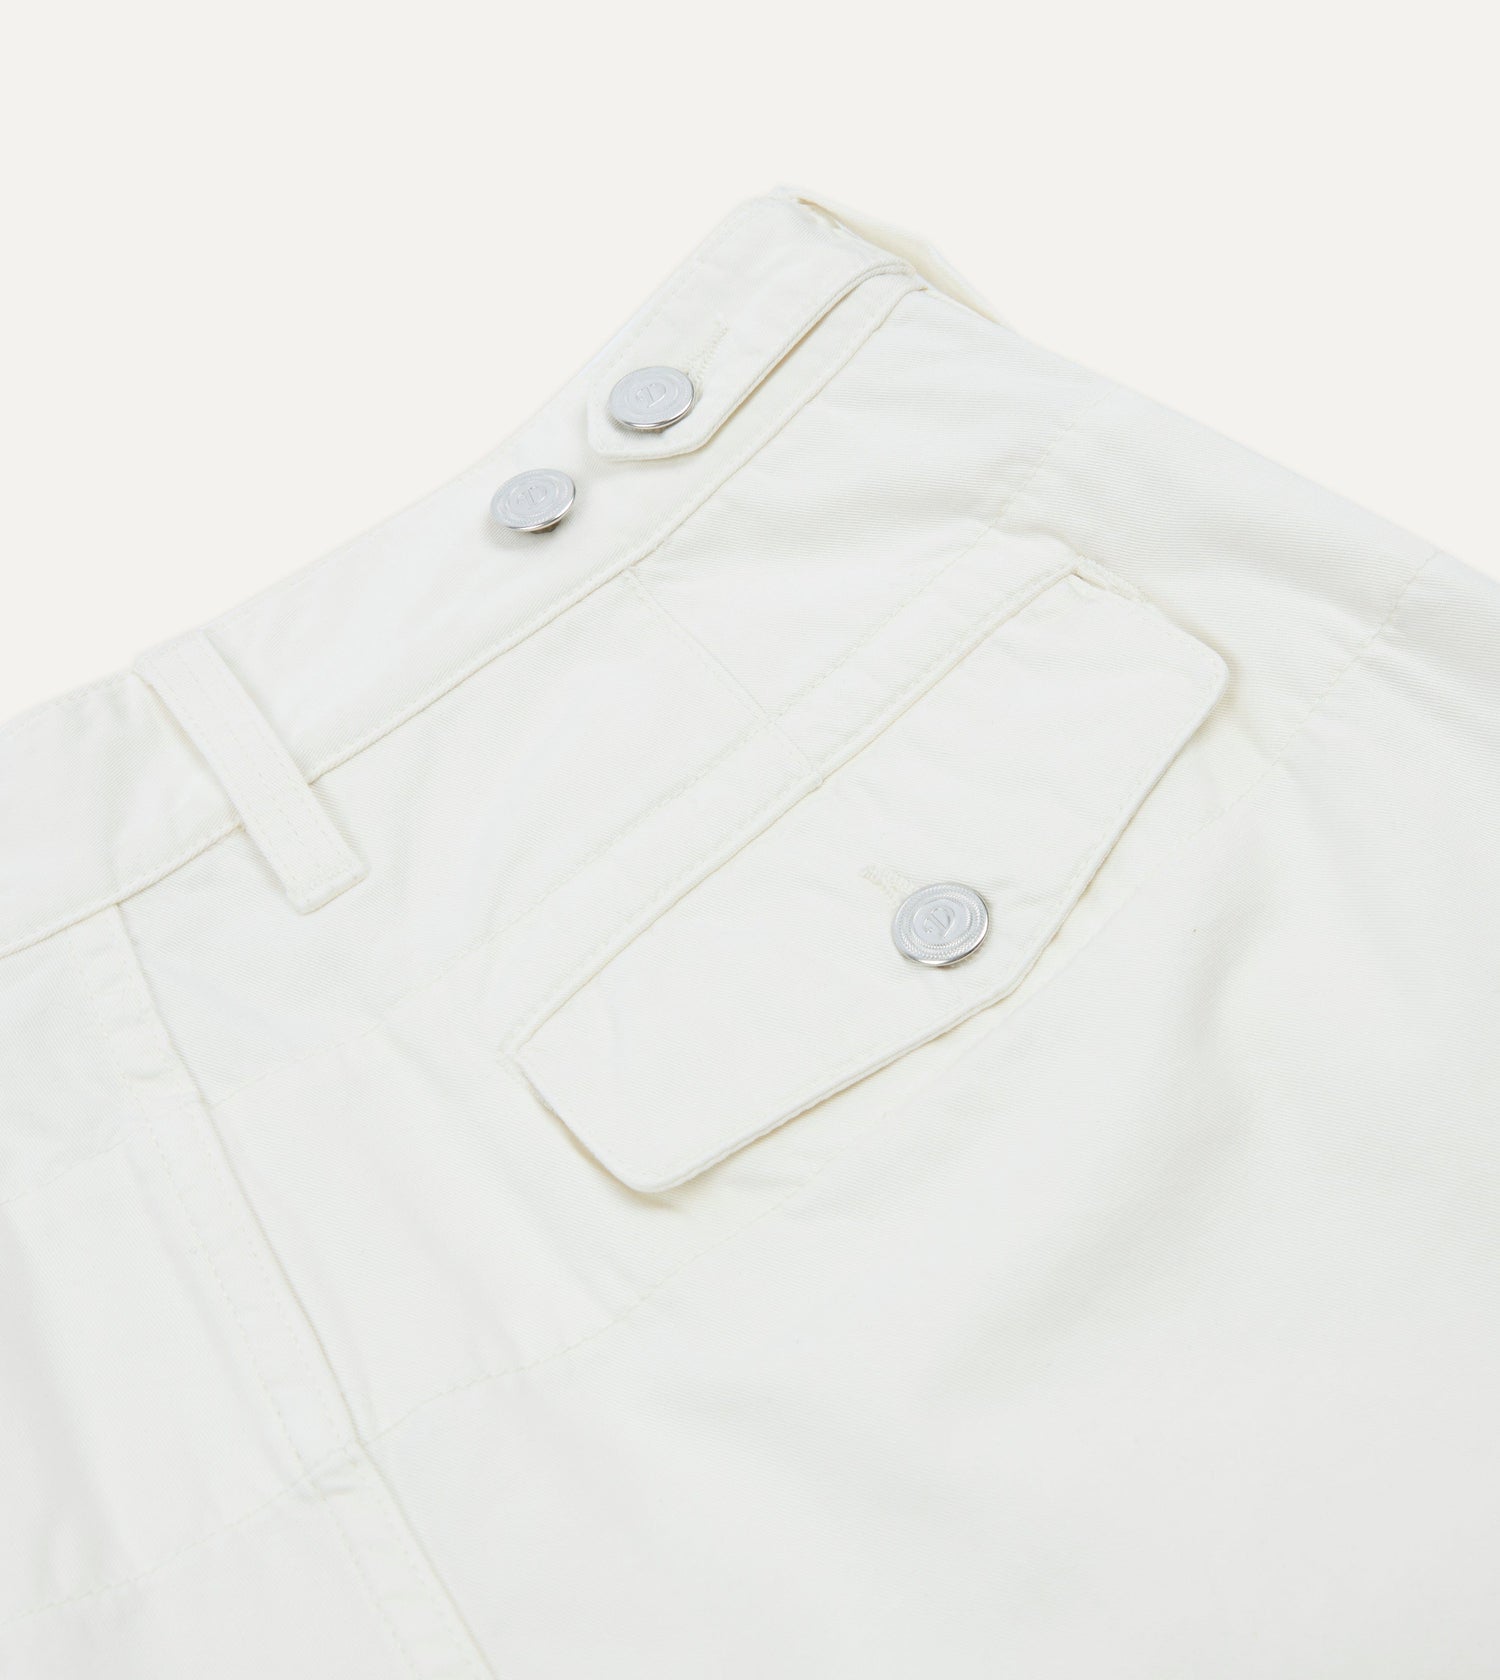 Washed Ecru Cotton Twill Single-Pleat Shorts